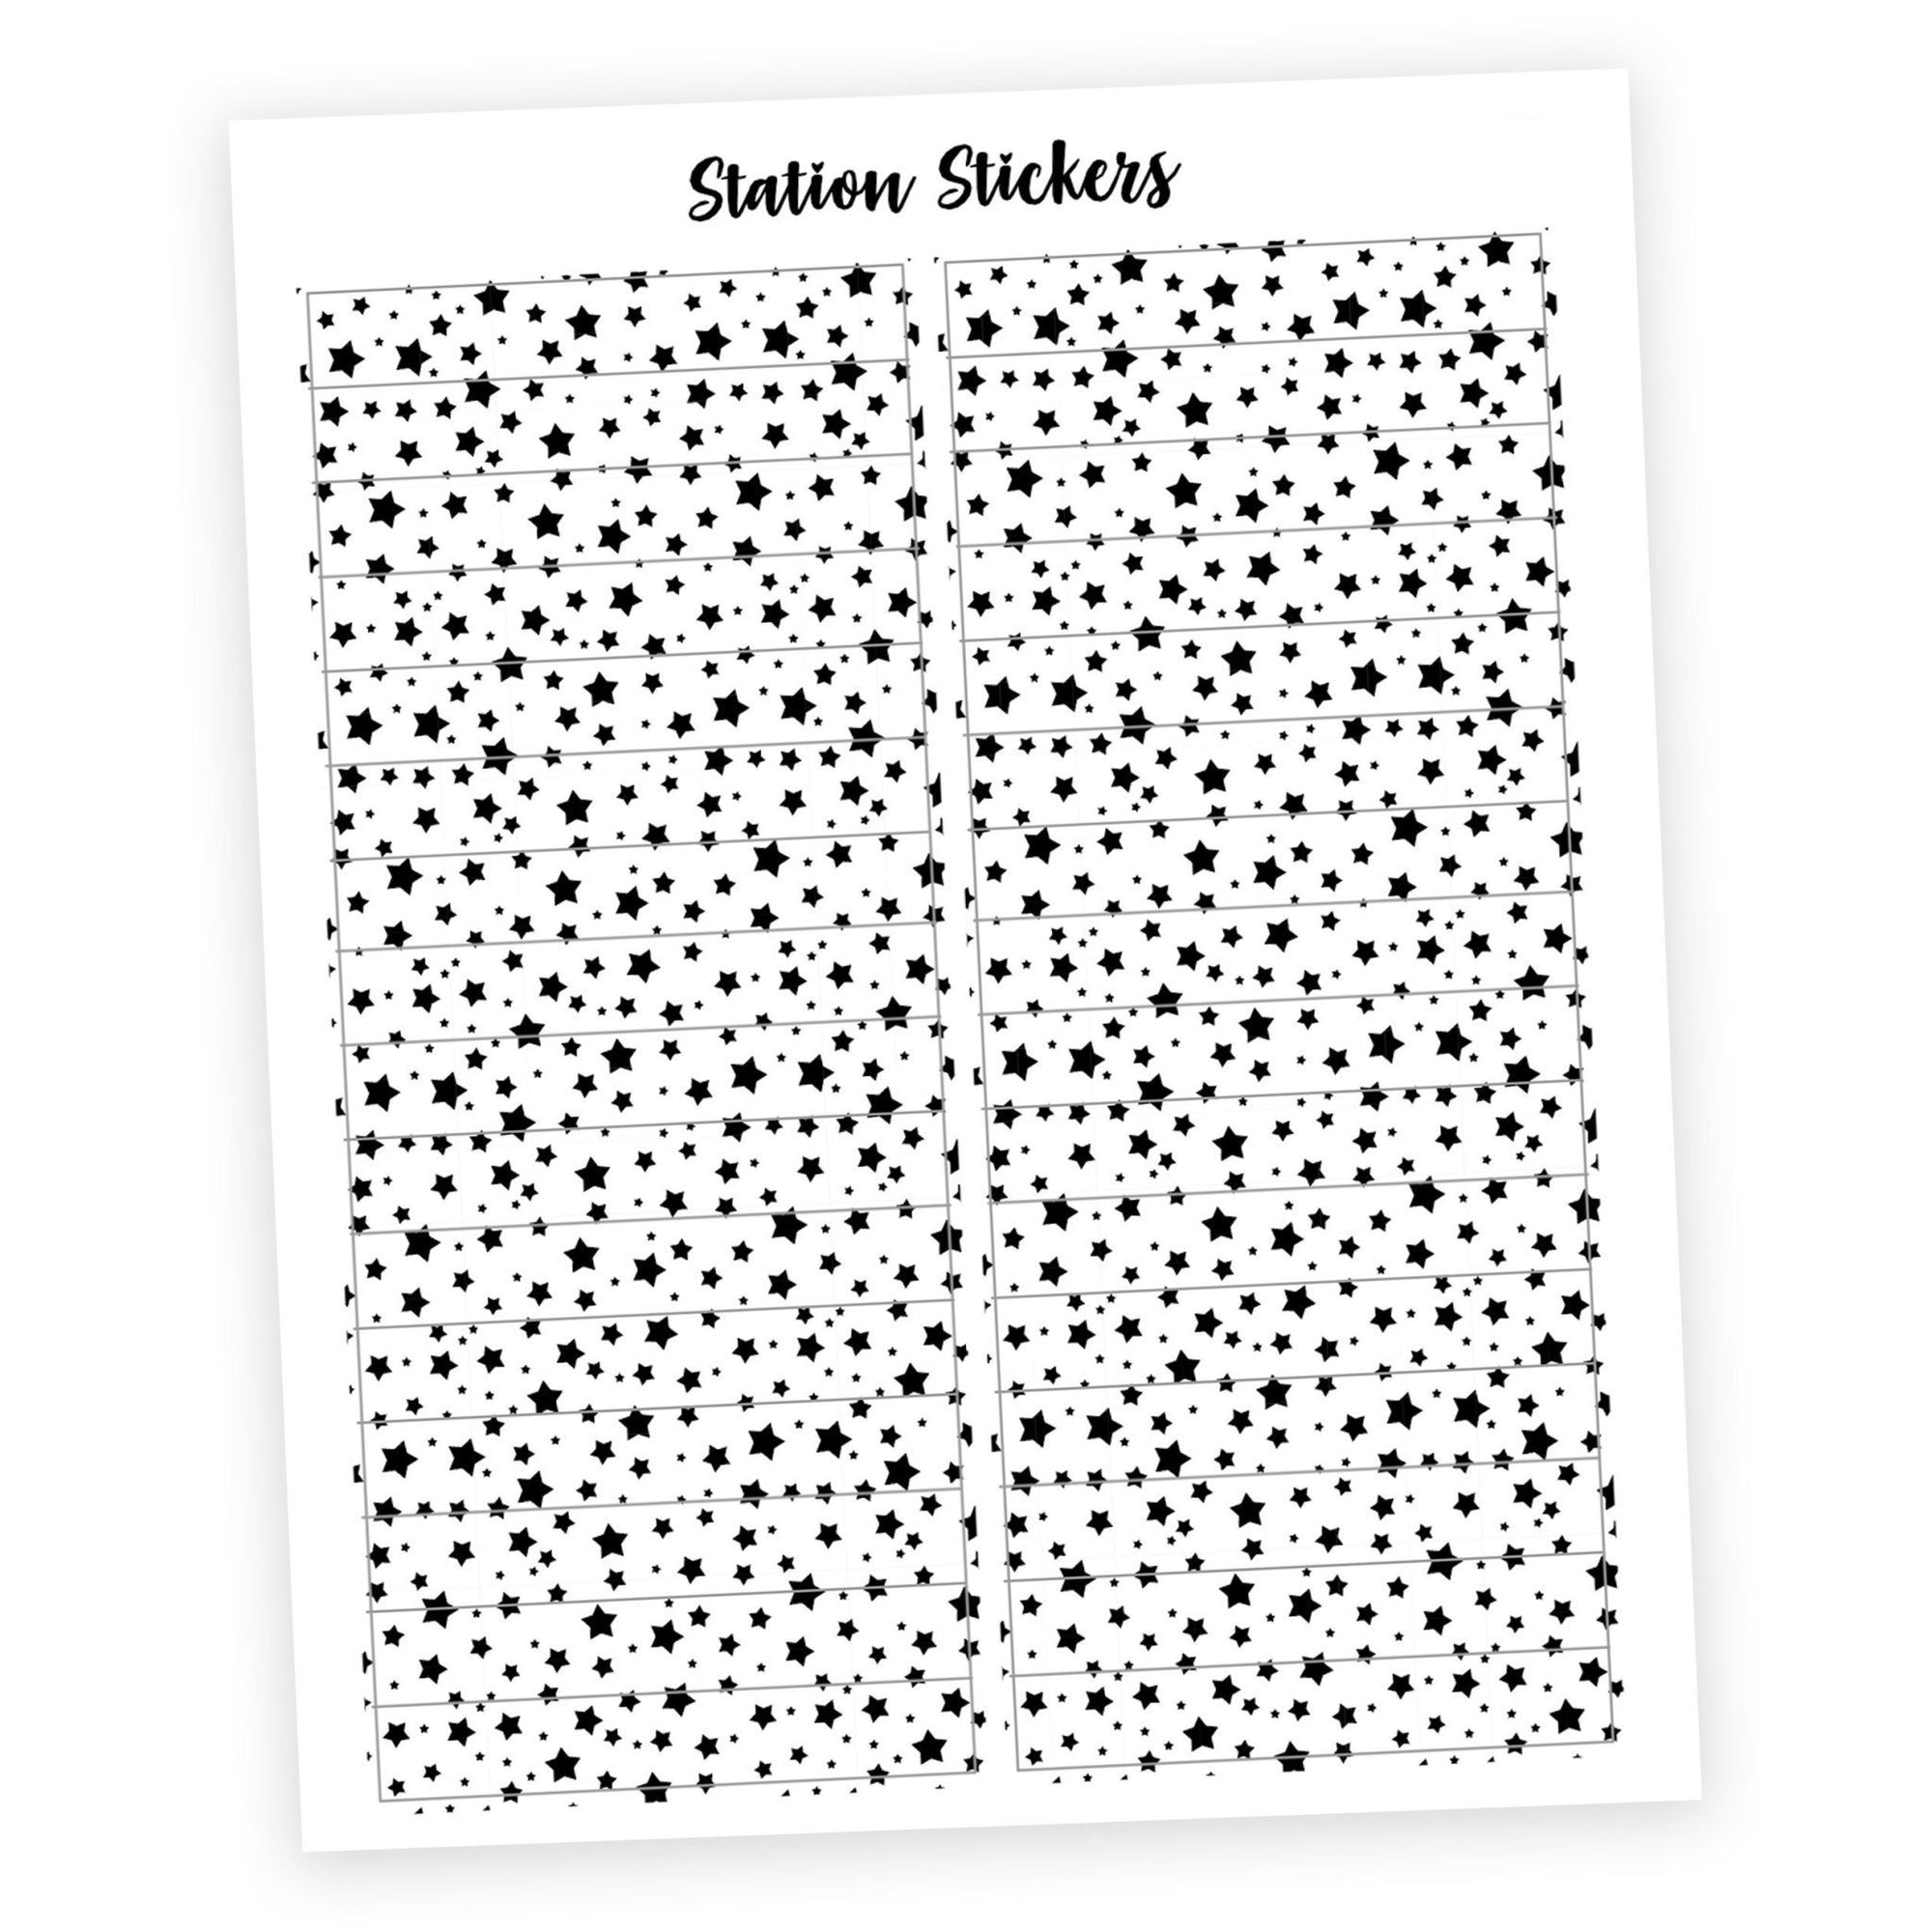 OVERLAY HEADER • STARS - Station Stickers